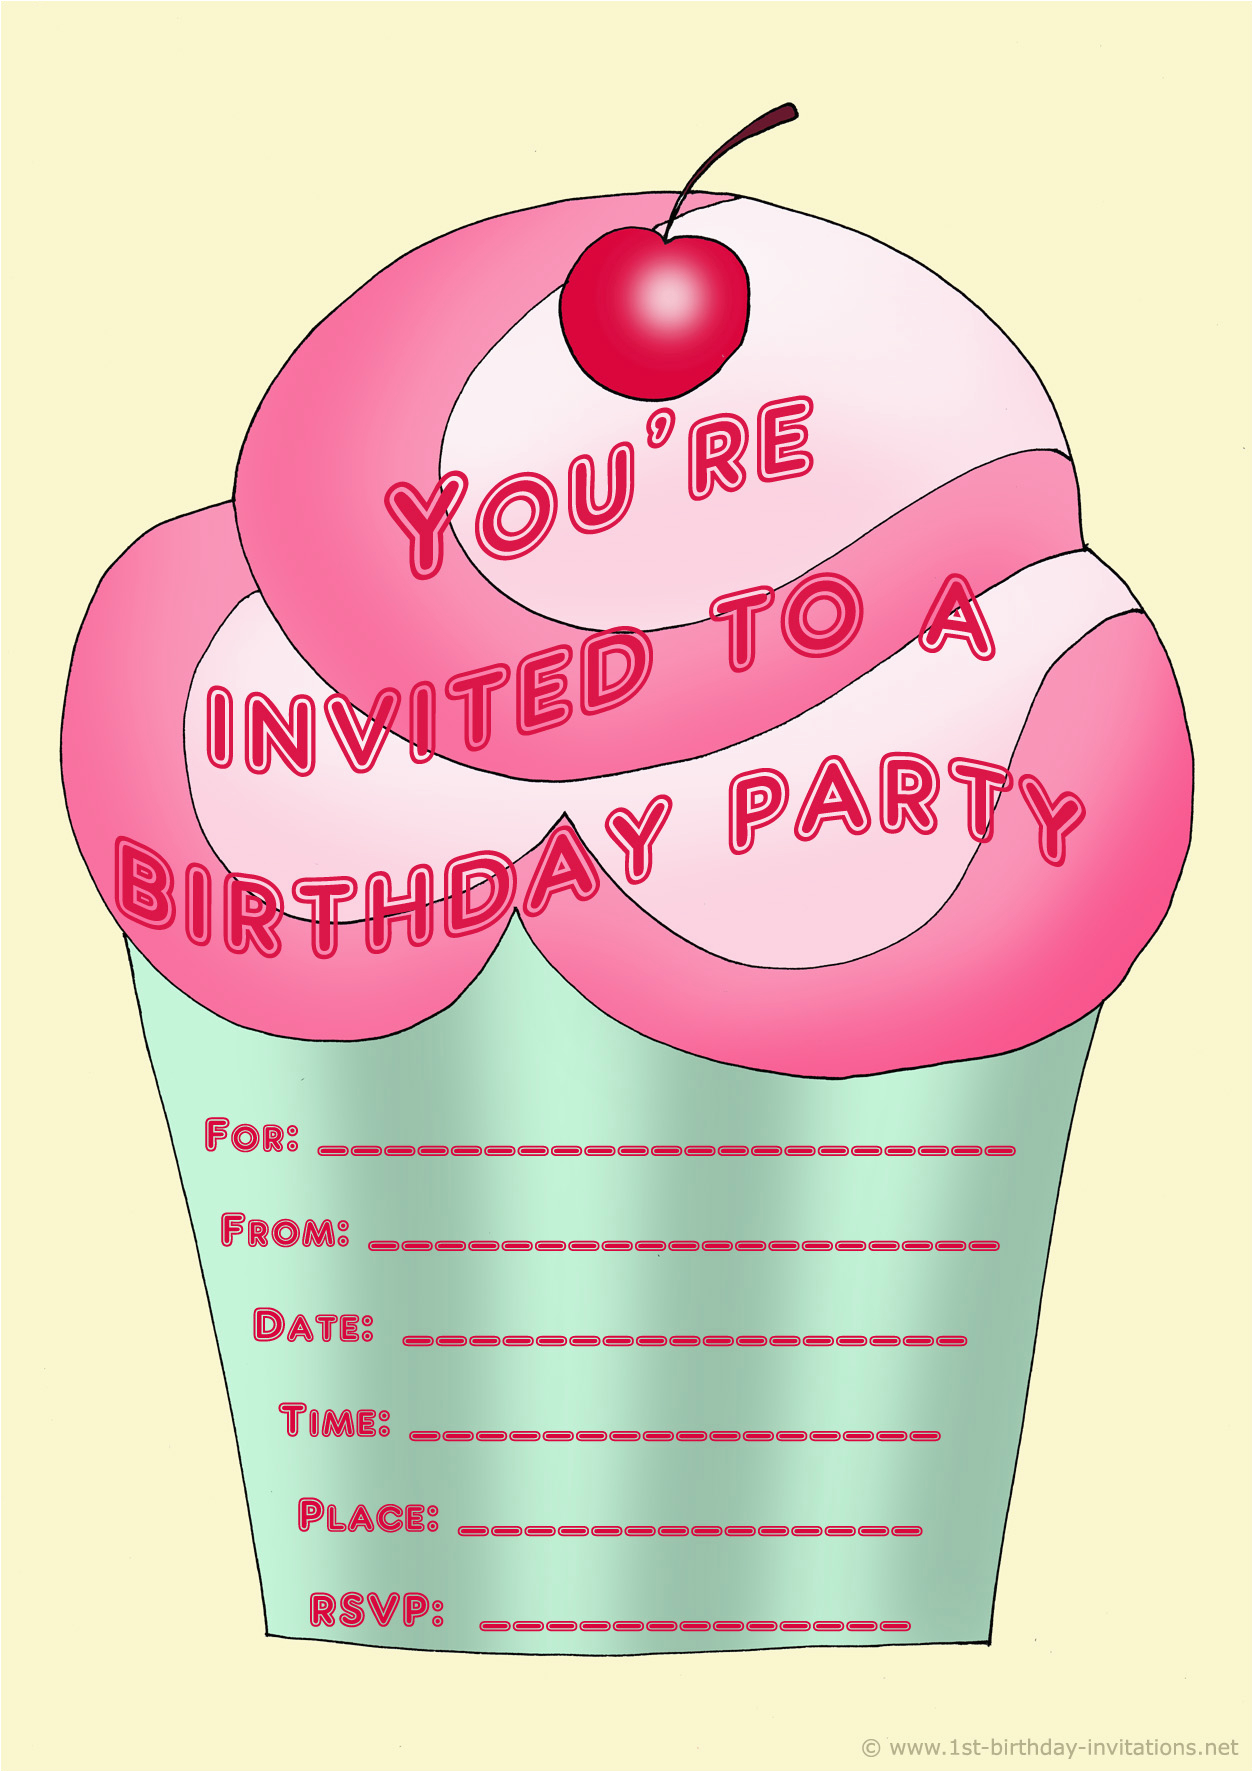 personalized birthday invitations